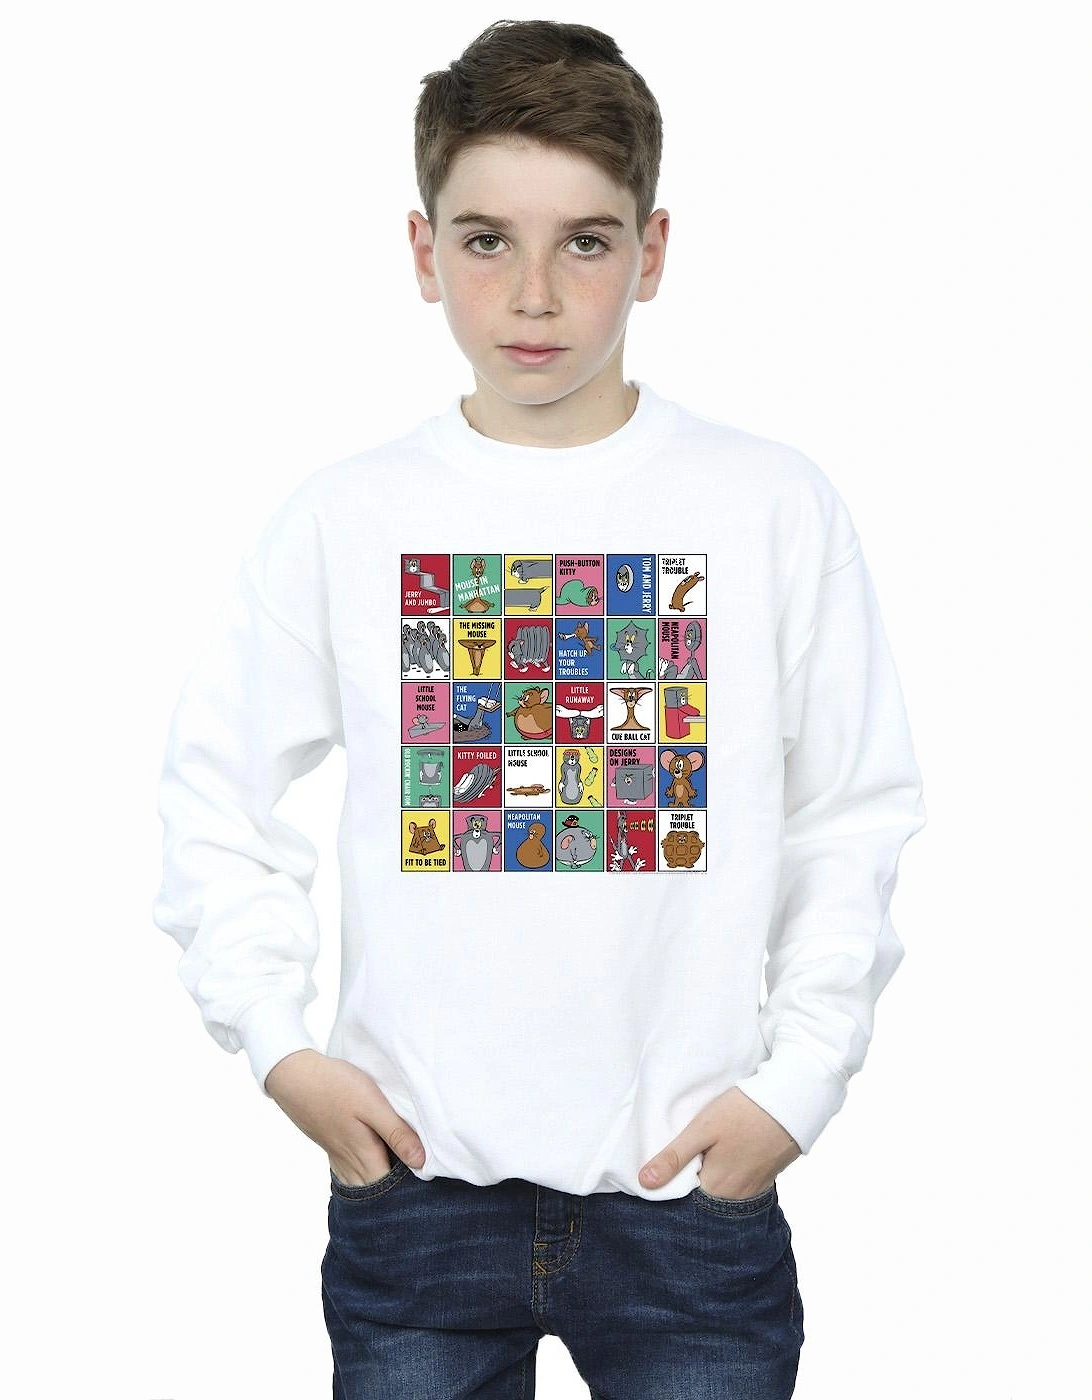 Tom And Jerry Boys Grid Squares Sweatshirt